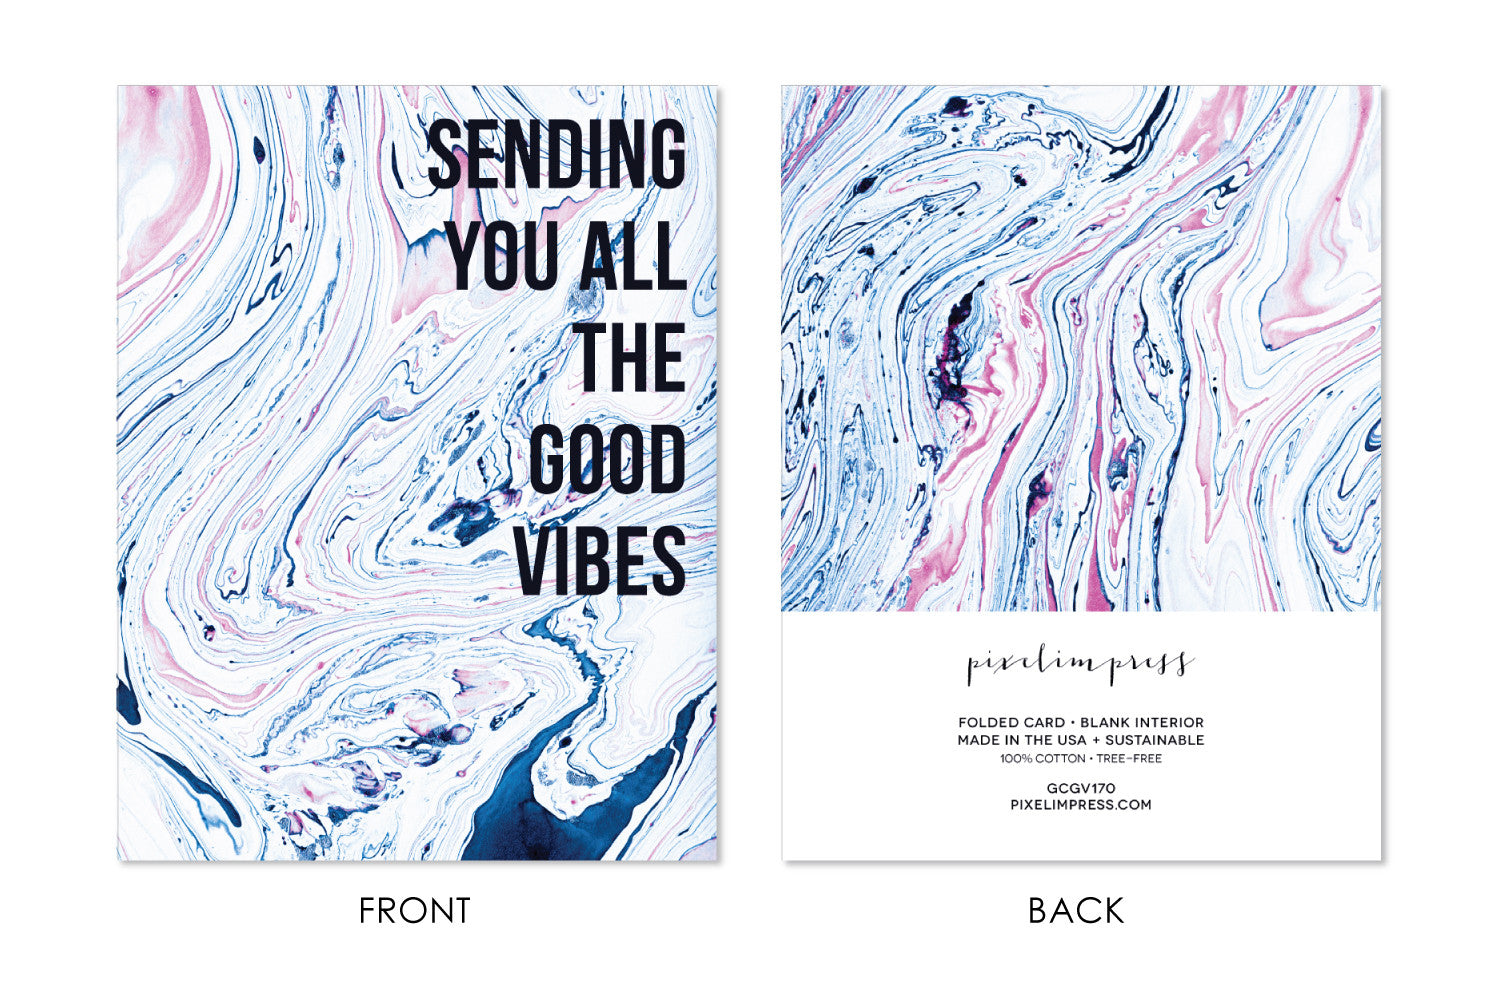 GOOD VIBES Hippie Bohemian Indigo + Blush Marble Greeting Card by pixelimpress